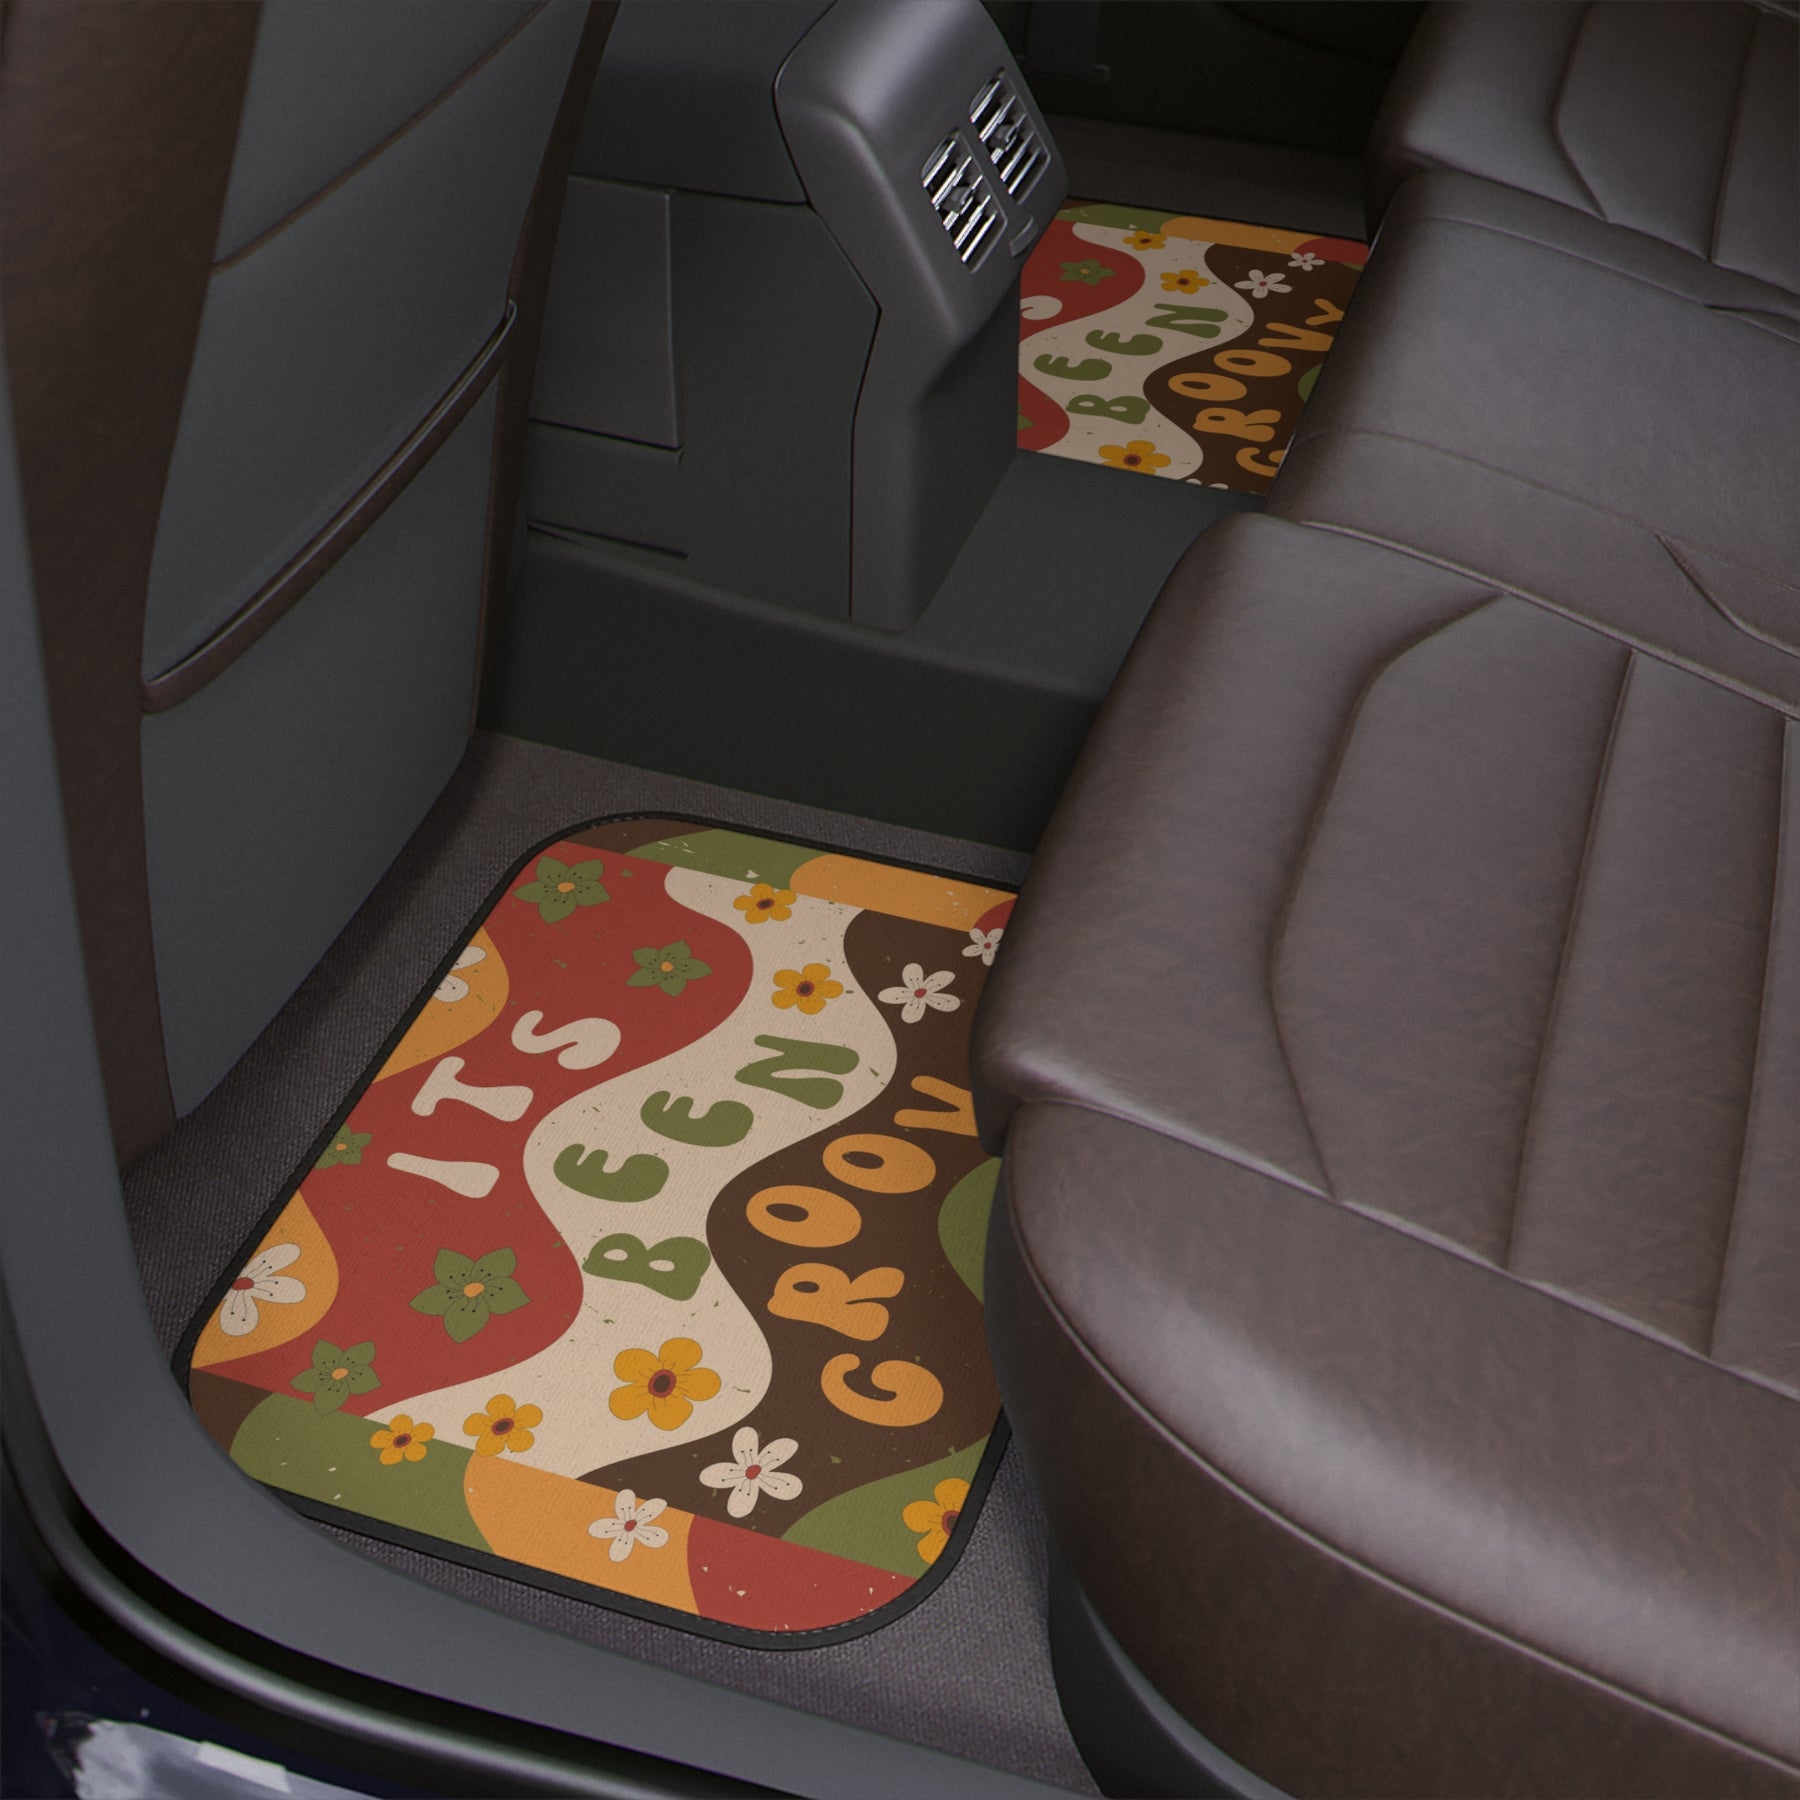 Boho Car Floor Mats, Aesthetic Retro Groovy Flower Car Floor Mats, Y2K Car Accessories, Cute Hippie Abstract Car accessories for woman